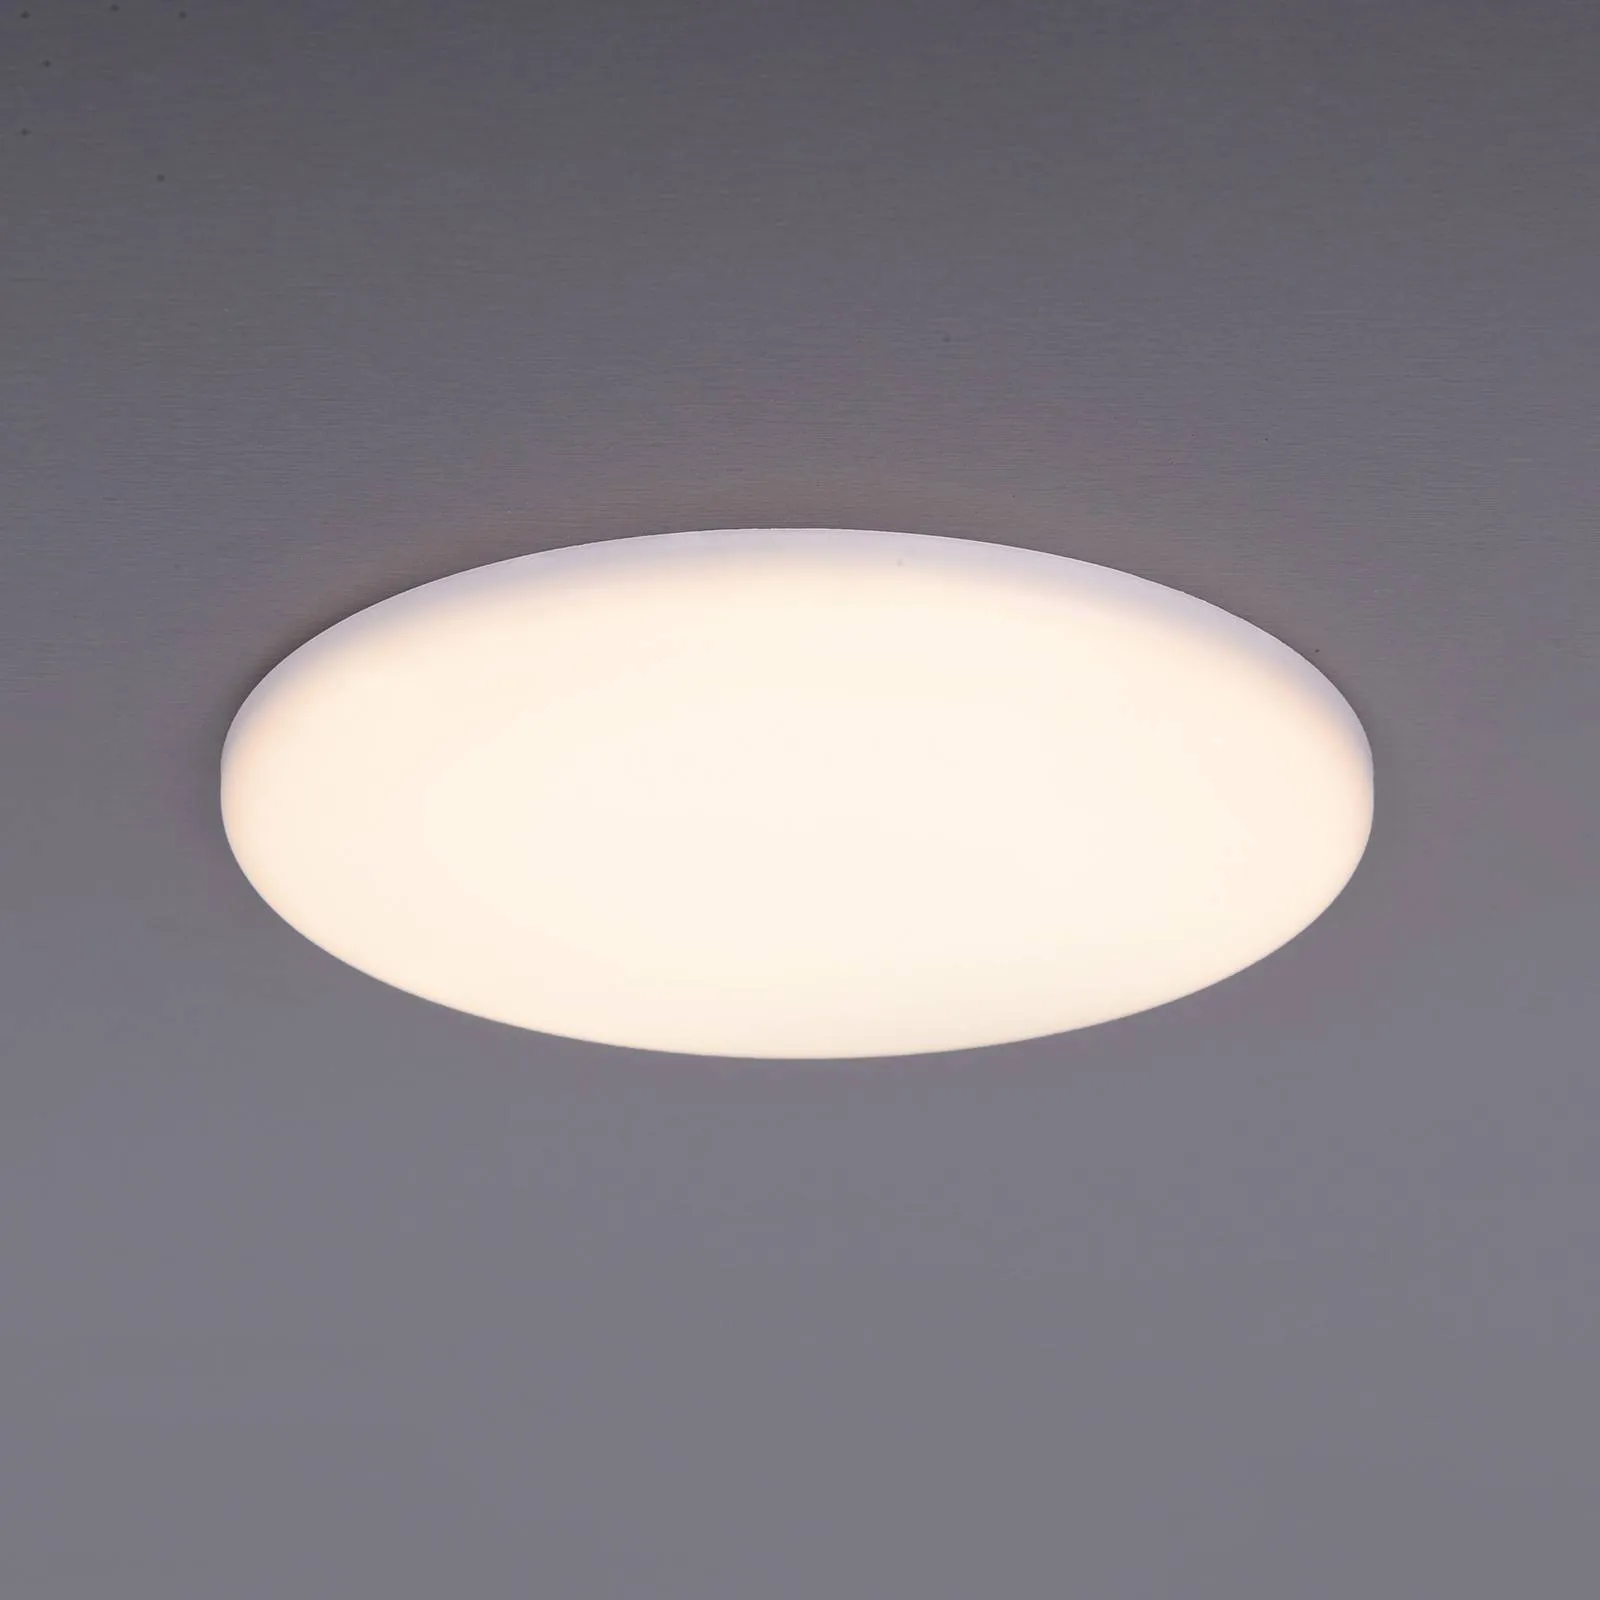 Sula LED downlight, round, IP66, Ø 15.5 cm